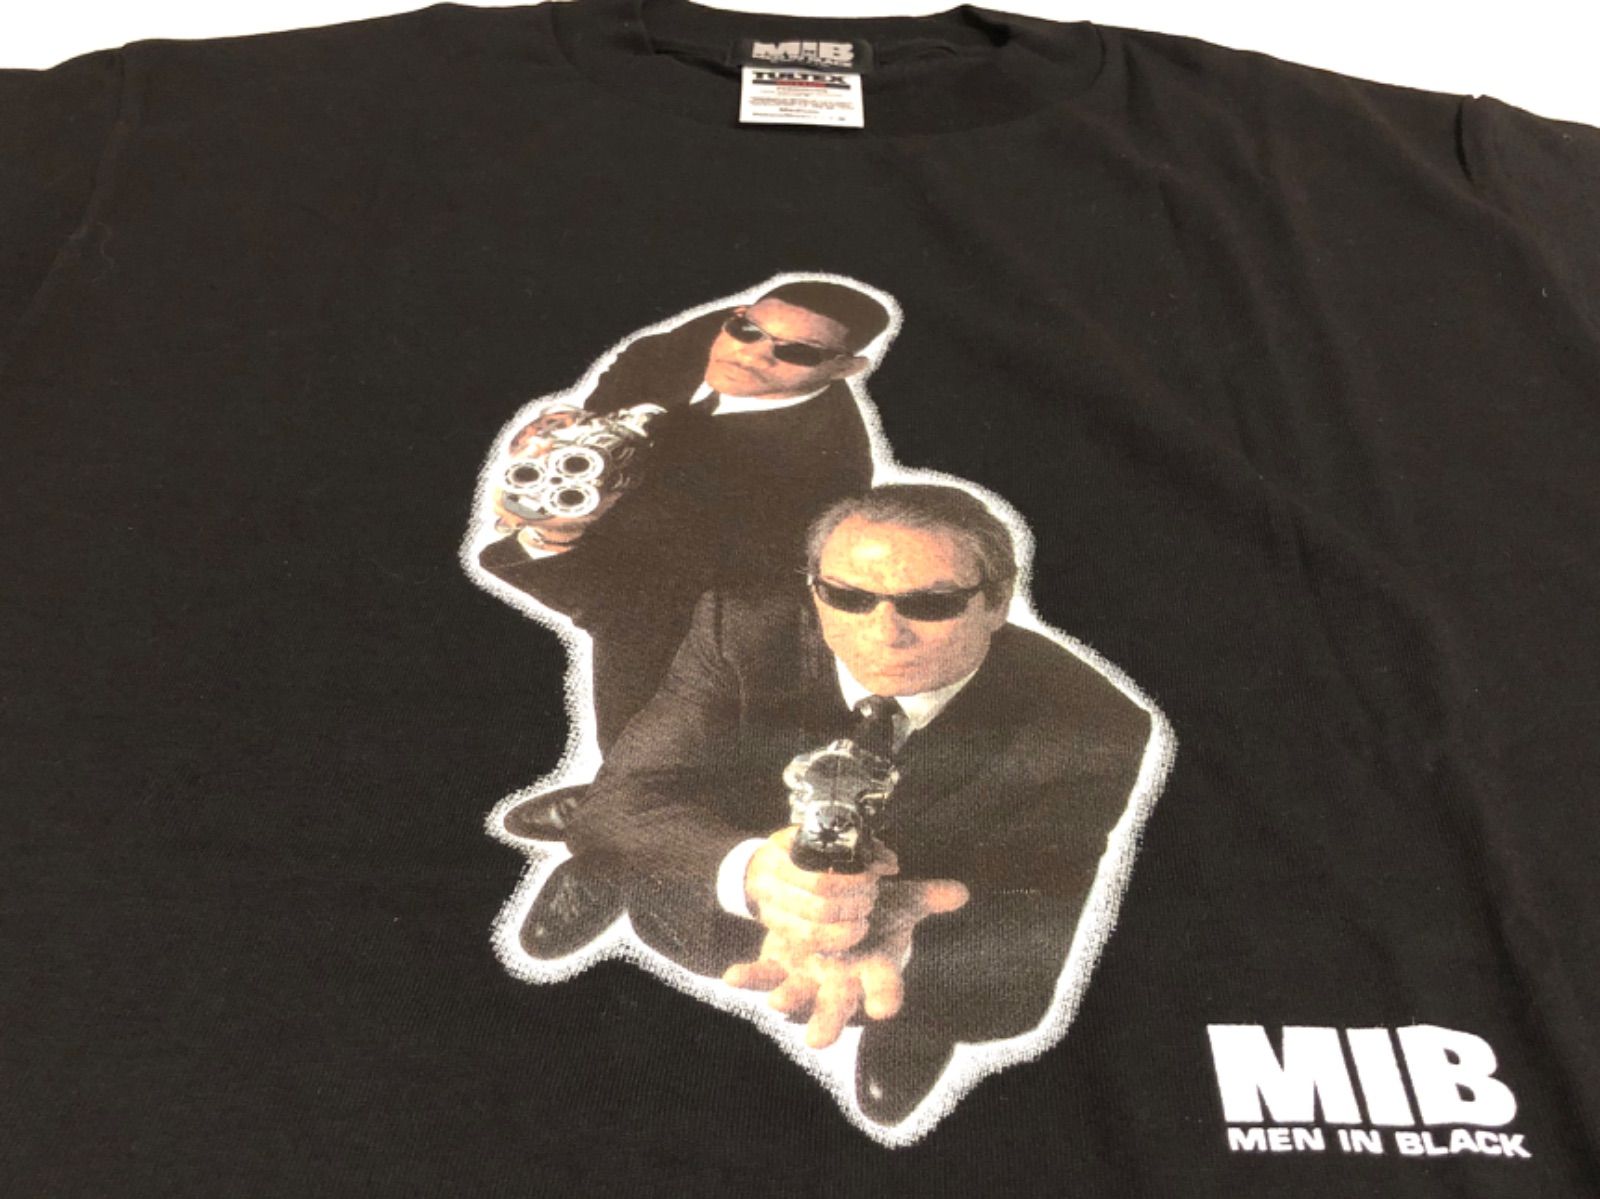 MIB MEN IN BLACK メンインブラック Tシャツ ウィルスミス - メルカリ